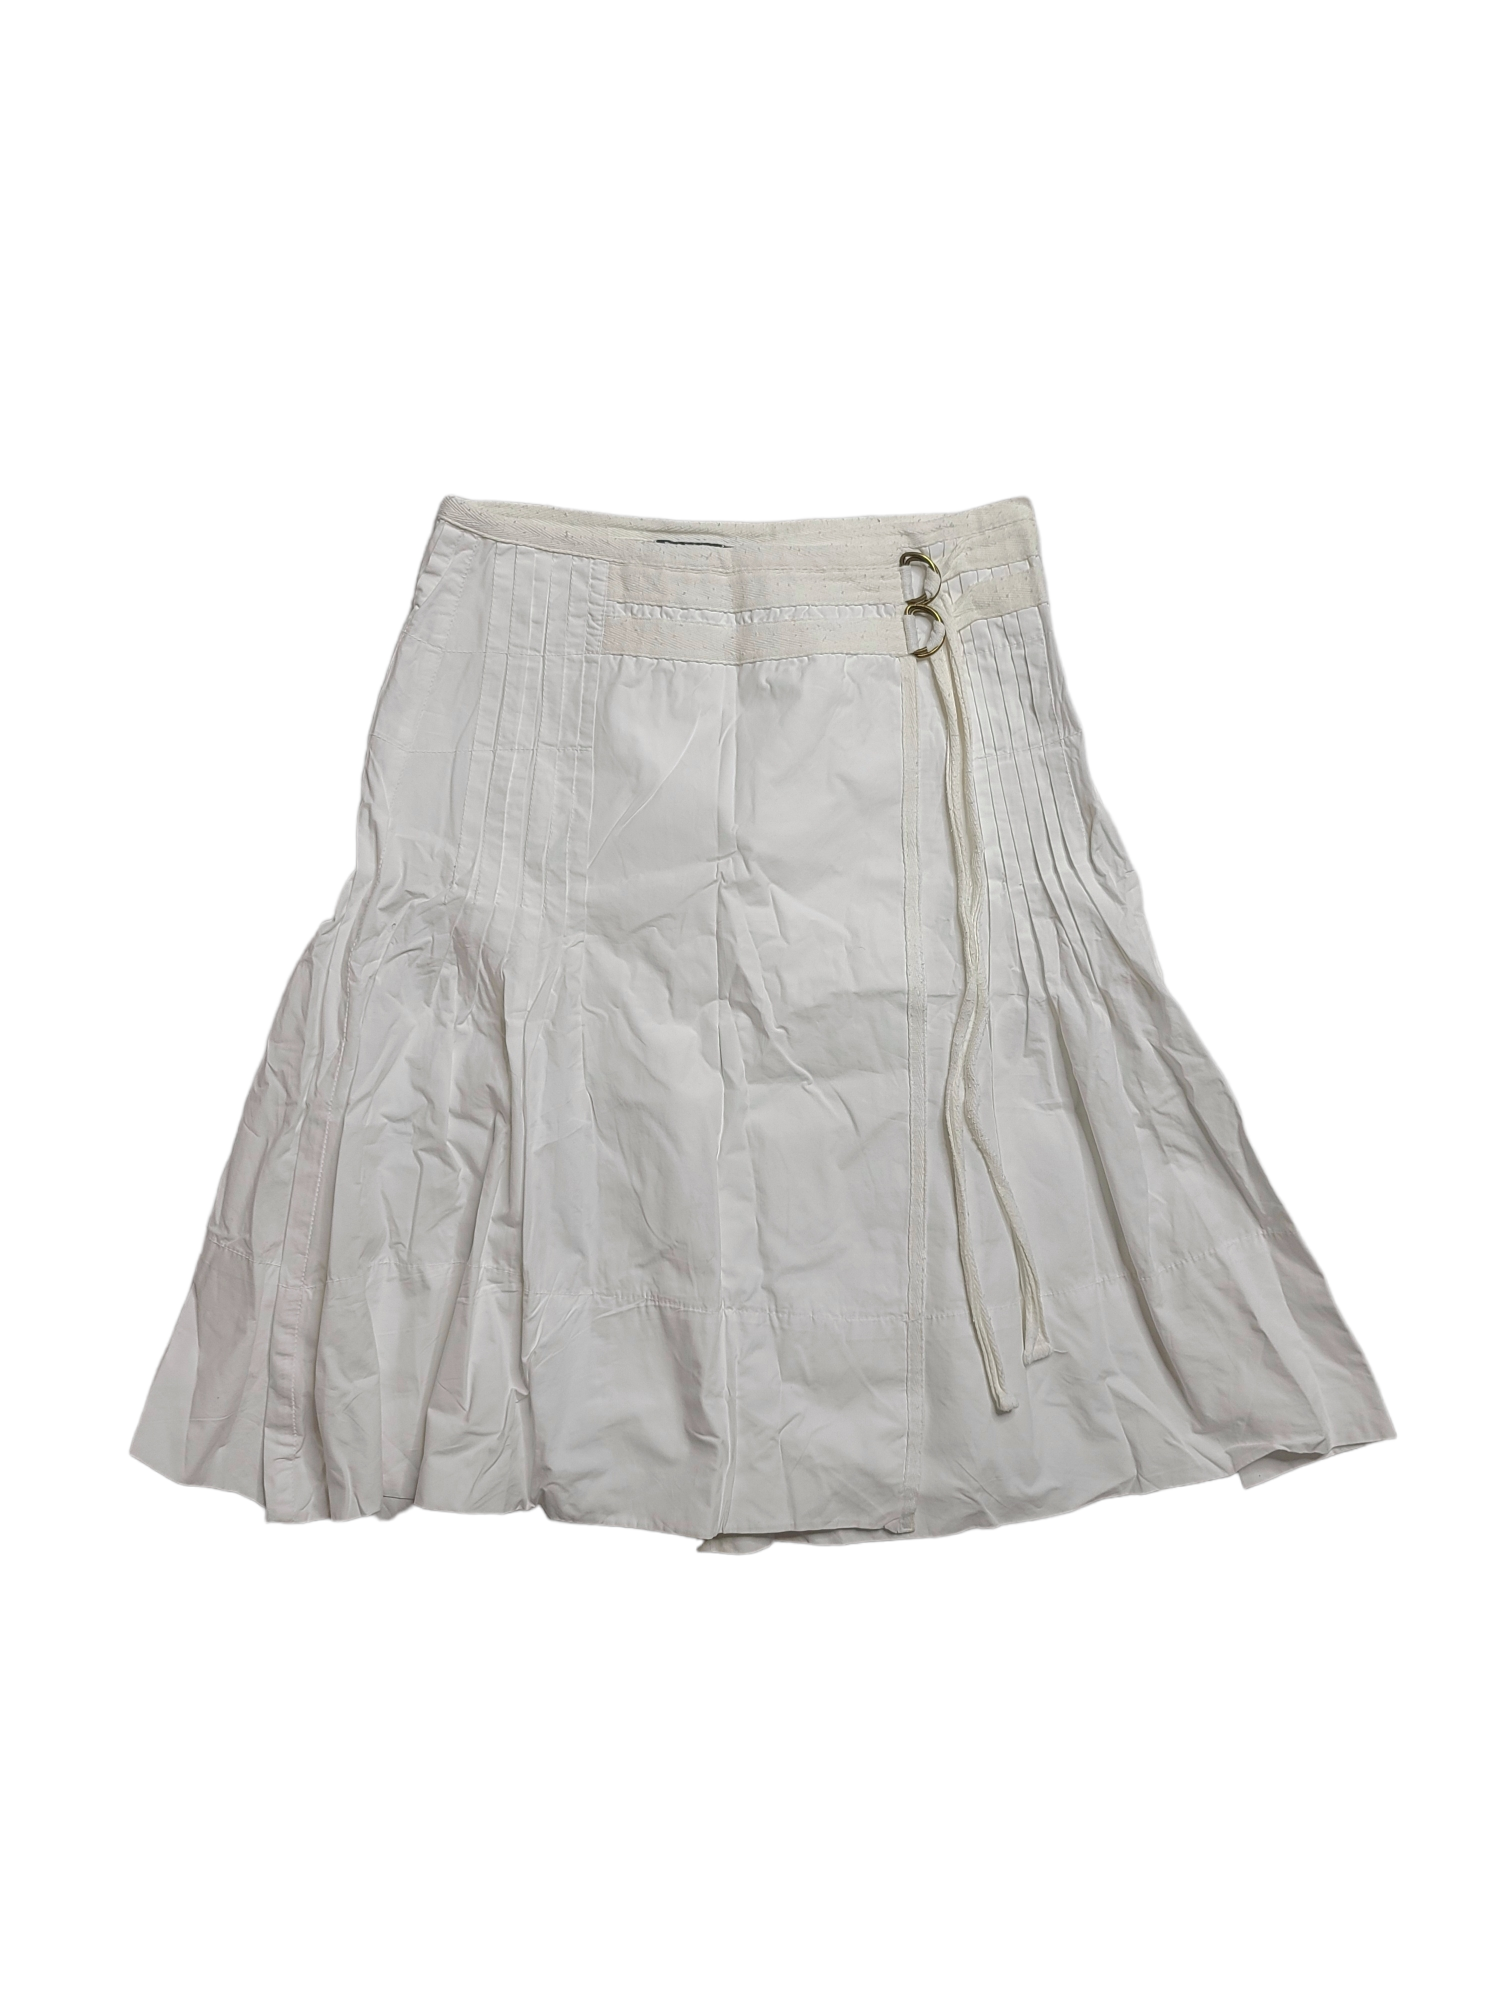 Mini skirt archive fashion plissee gorpcore sportwear 90s y2k neutralbstyle vintage dystopian subversive basics balletcore